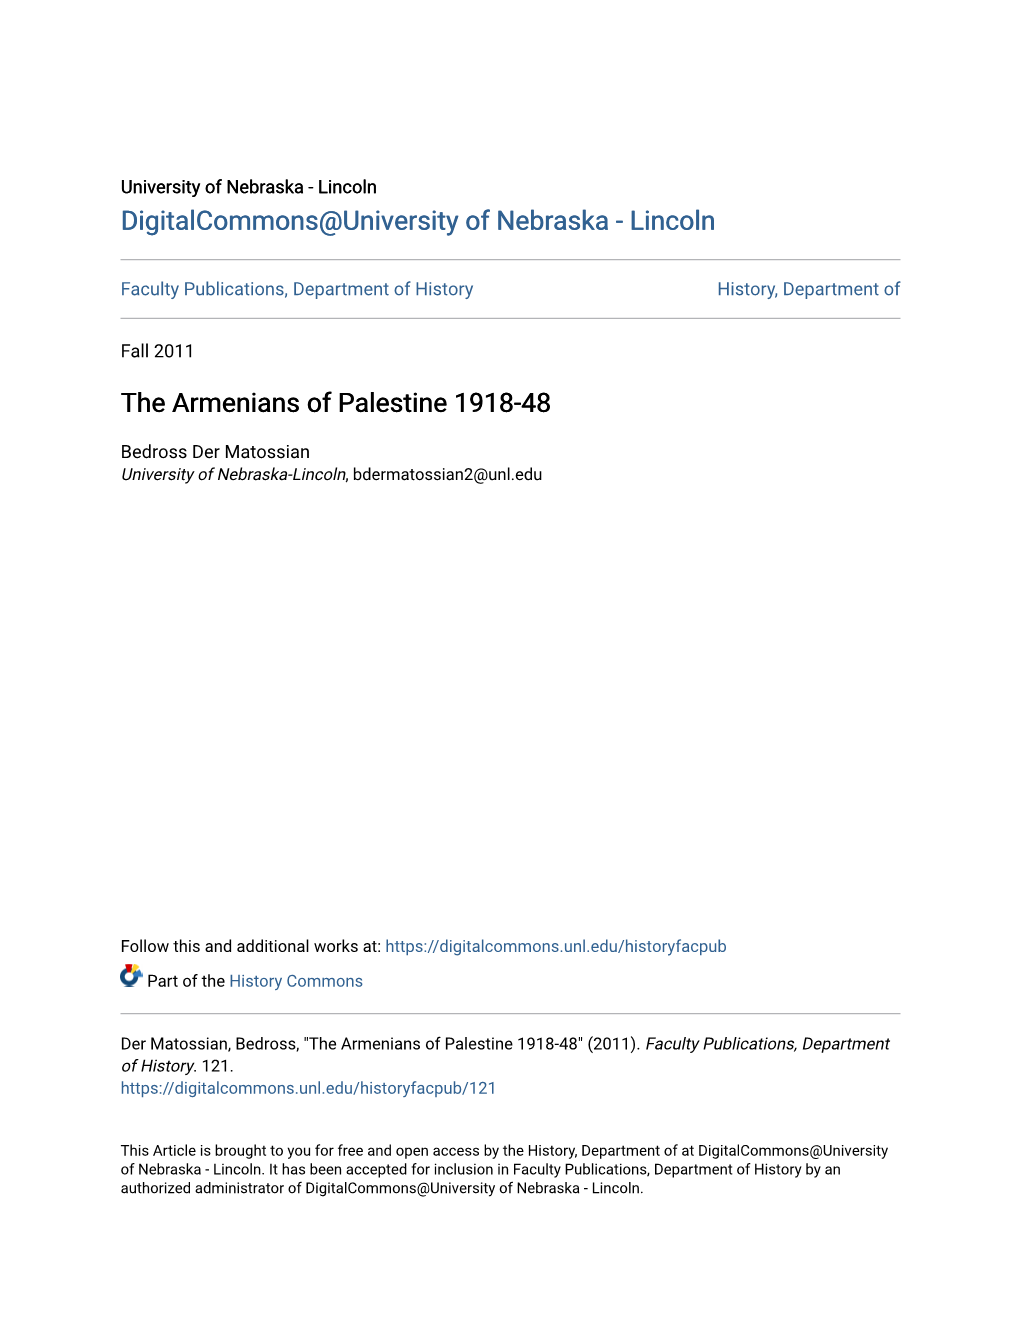 The Armenians of Palestine 1918-48